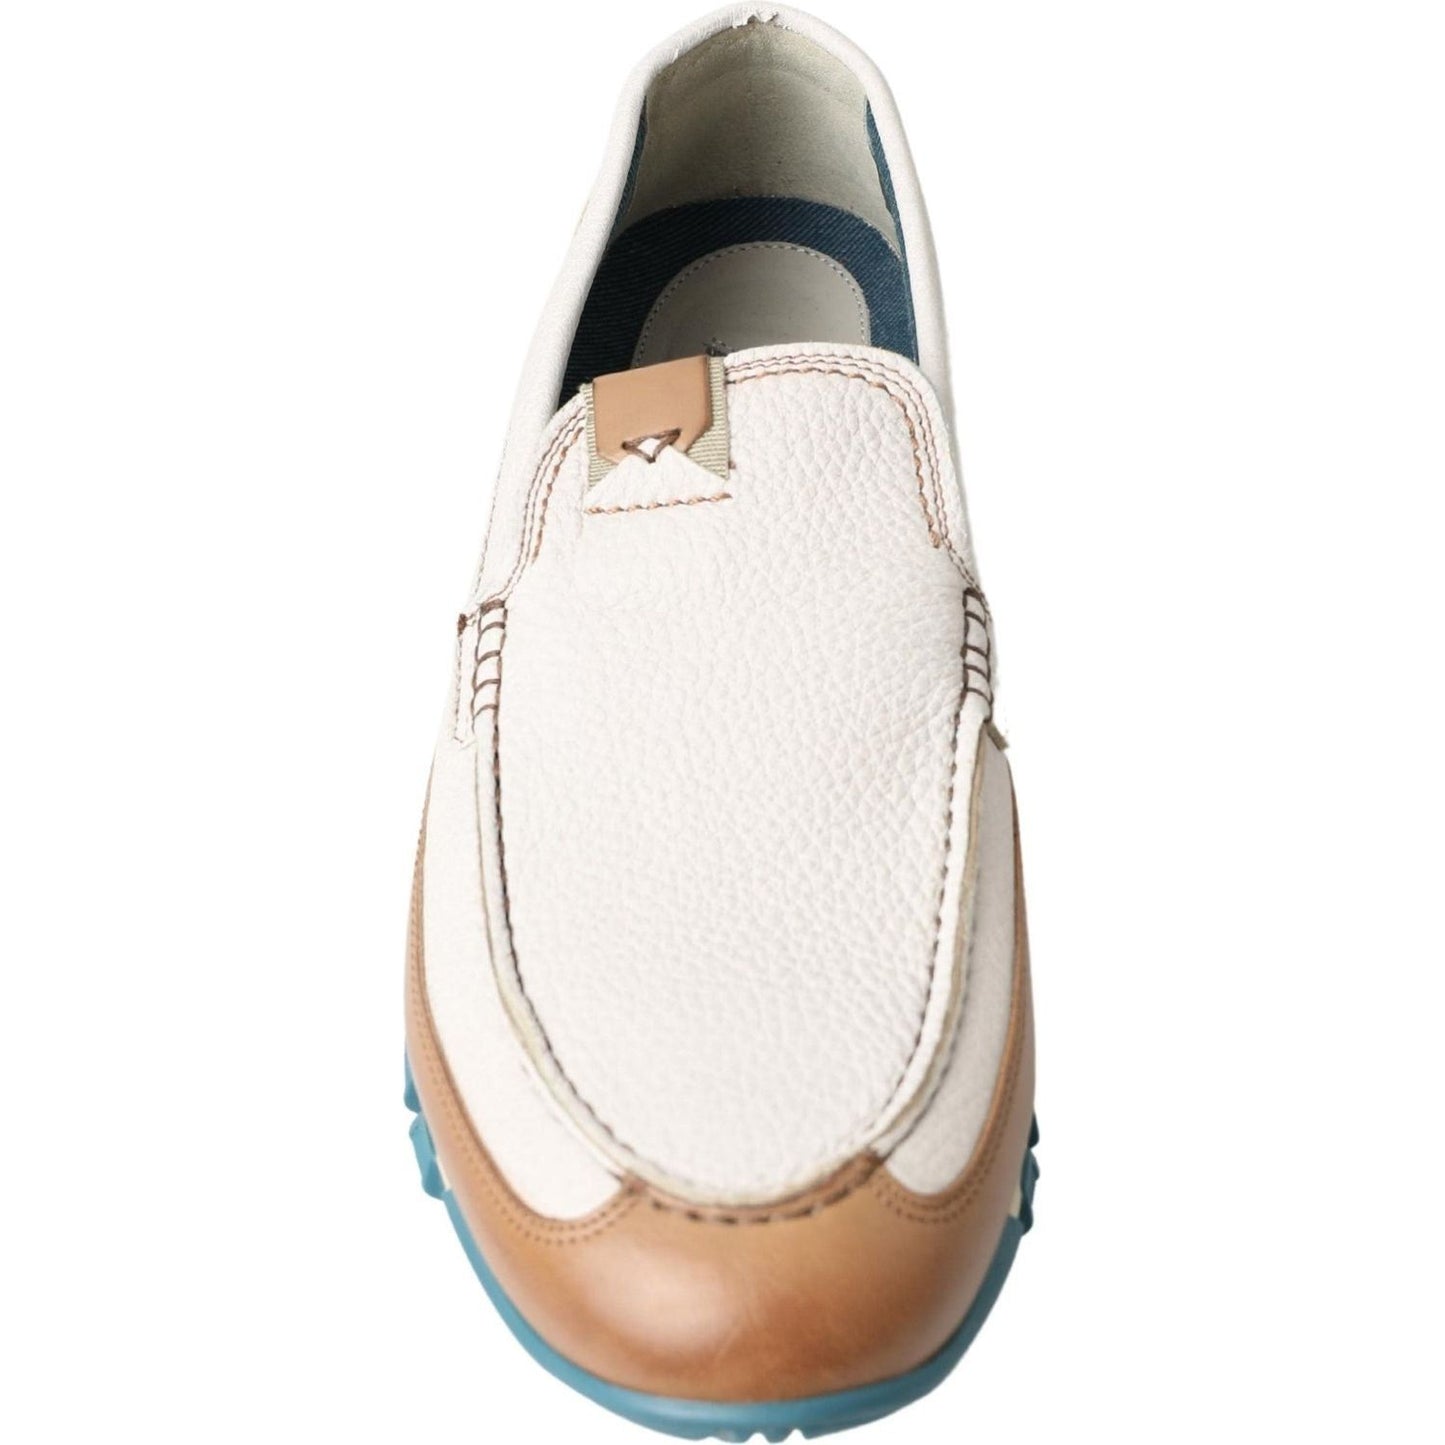 Dolce & Gabbana Elegant White Leather Slipper Loafers white-leather-loafers-moccasins-shoes